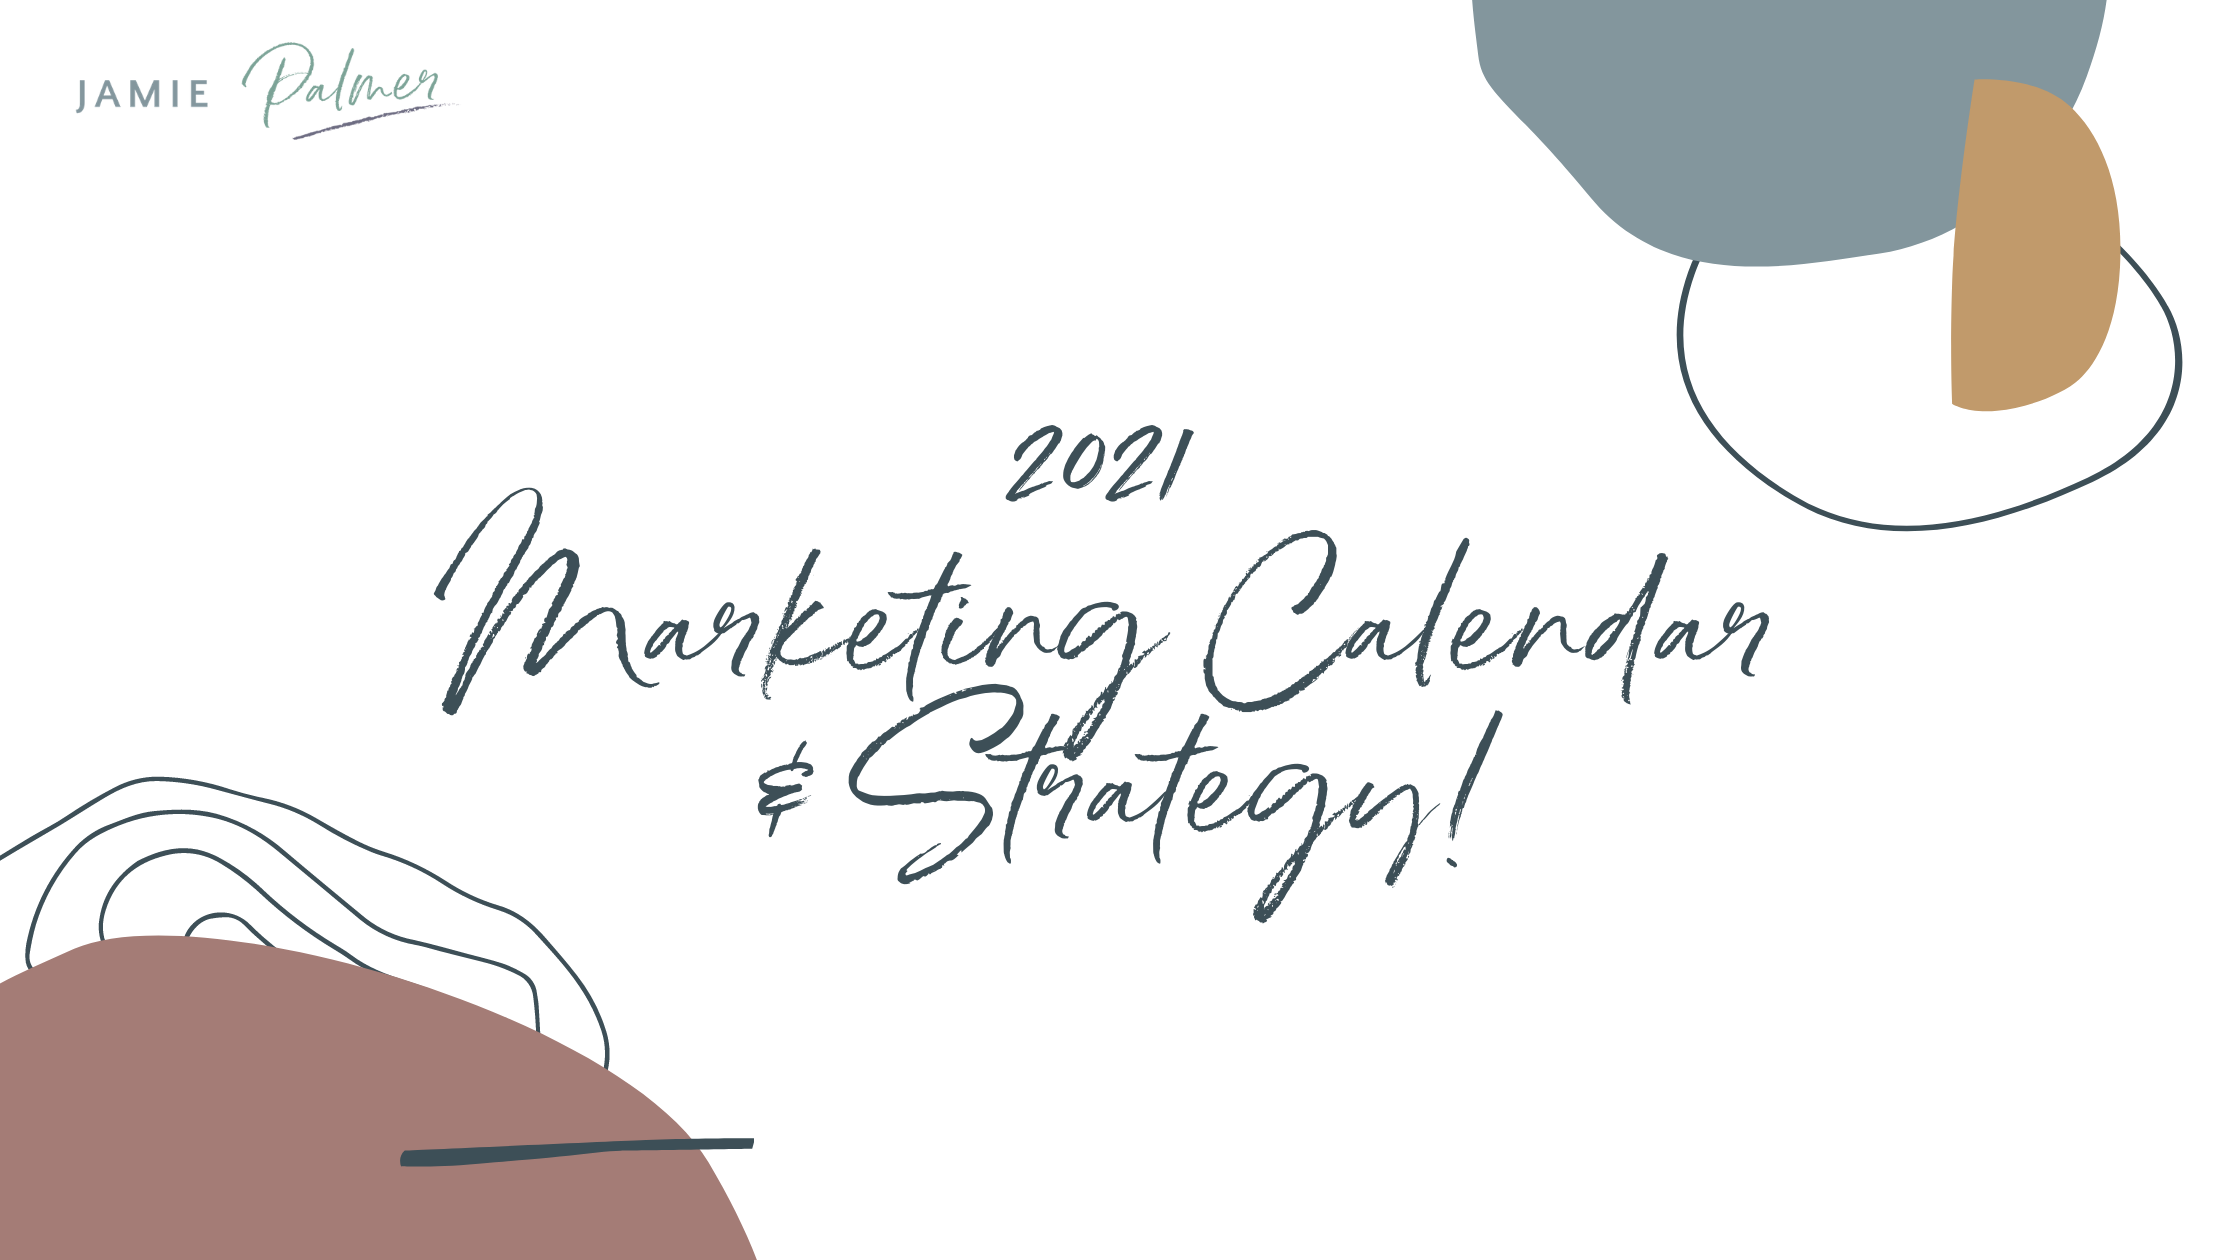 2021 marketing calendar and strategy